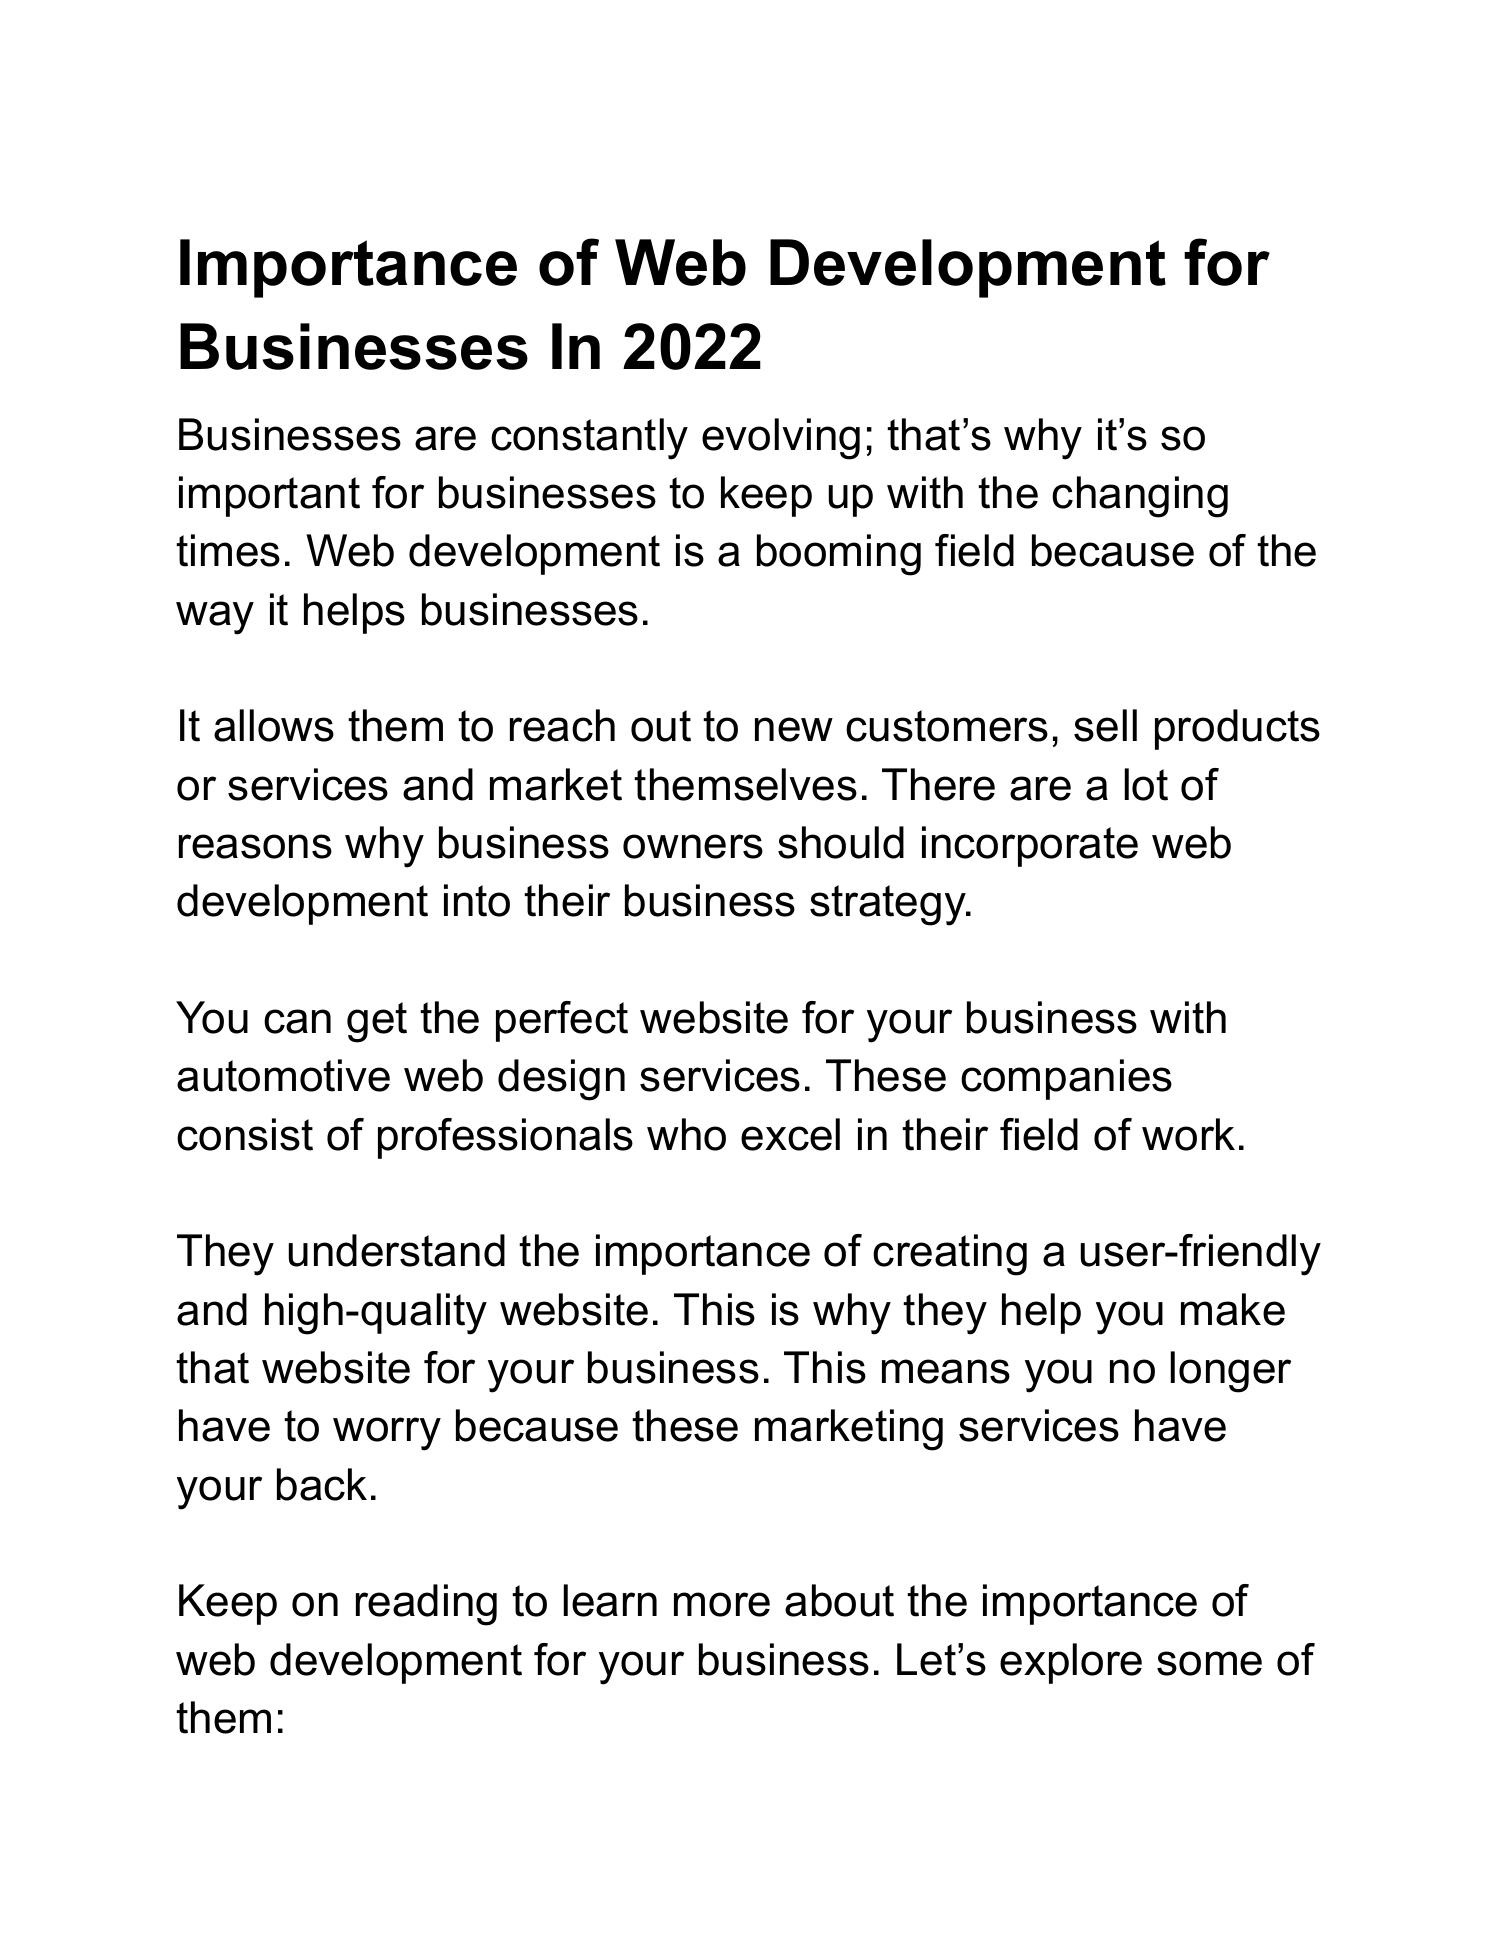 importance of web development essay